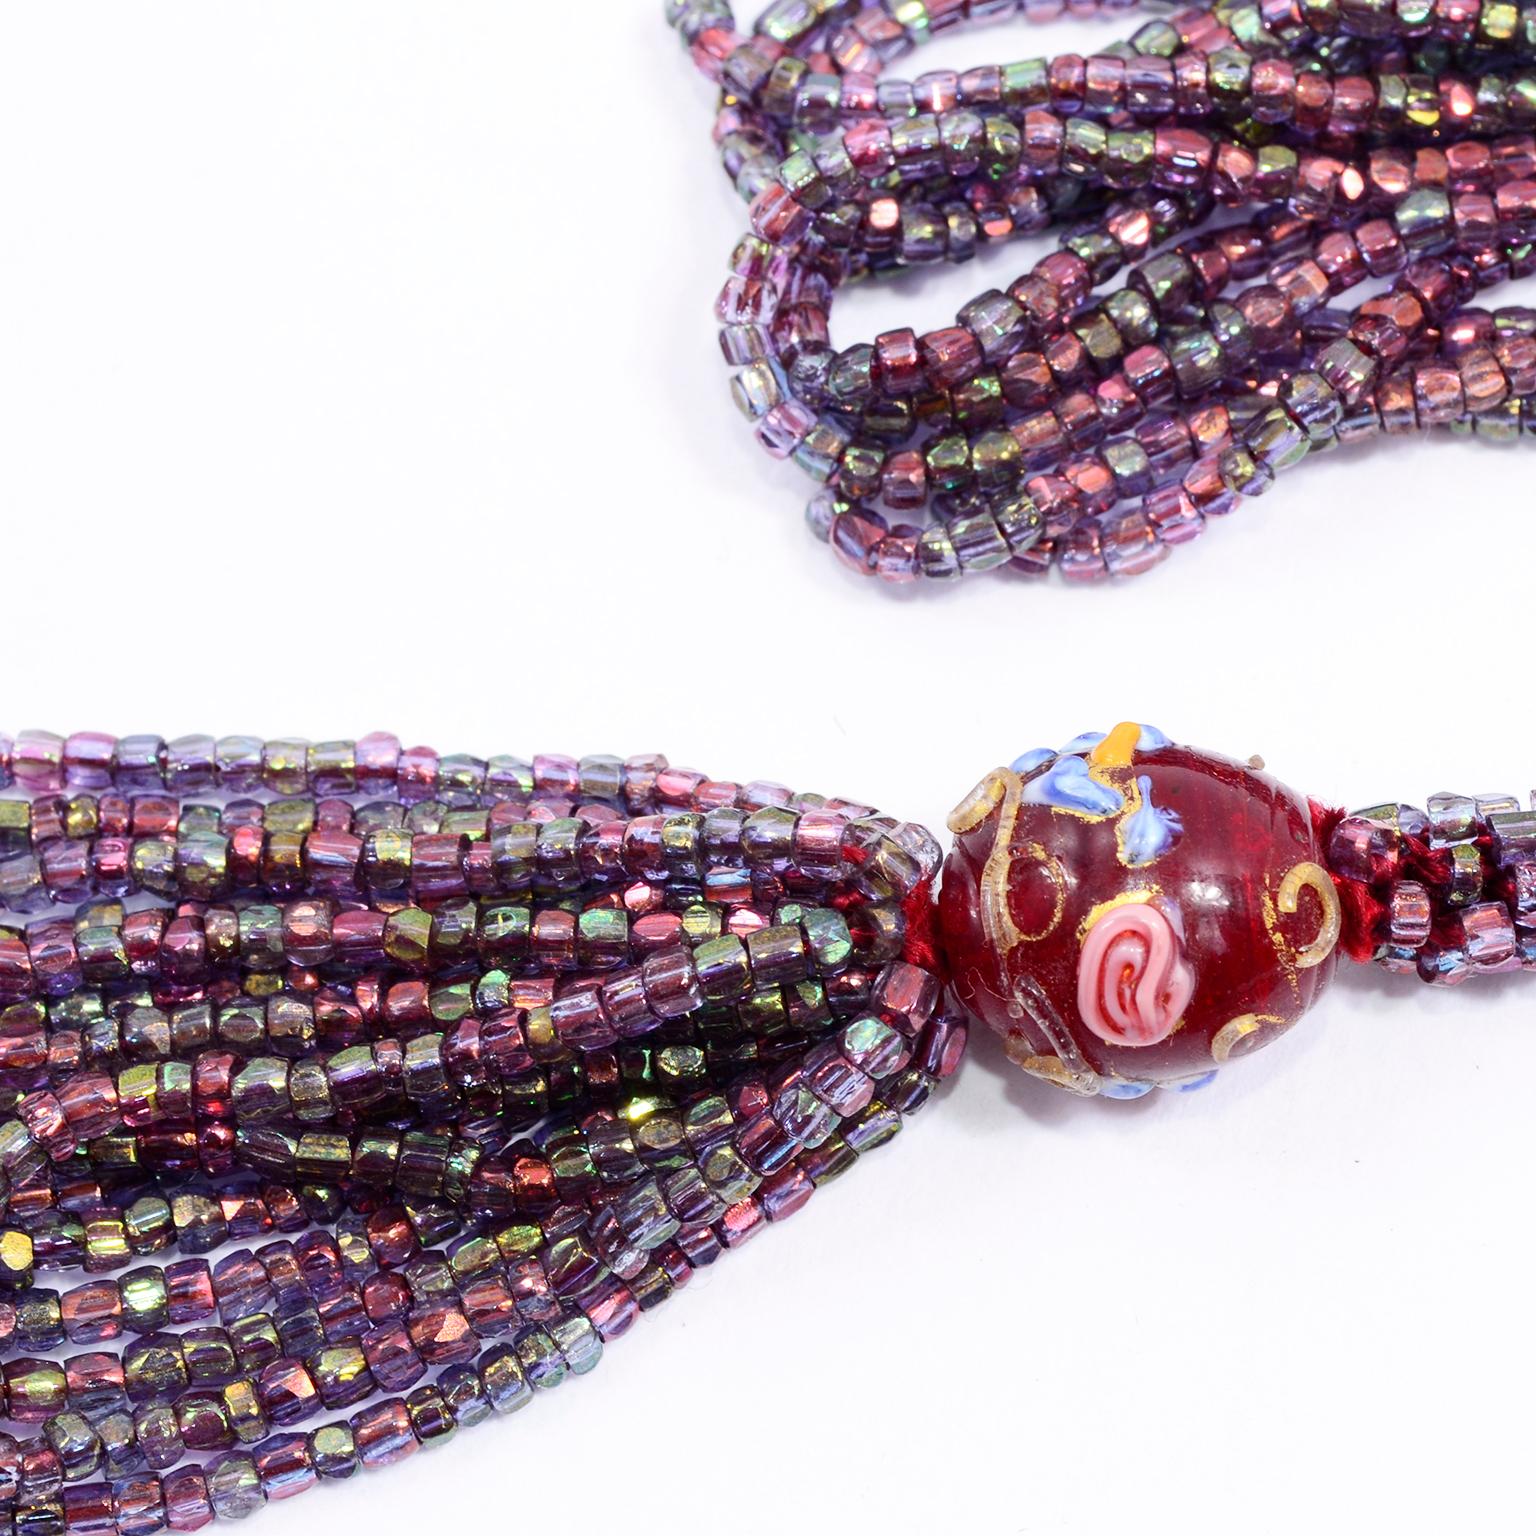 Women's Vintage 1920s Sautoir Beaded Tassel Flapper Necklace W Lampwork Beads & Fringe For Sale